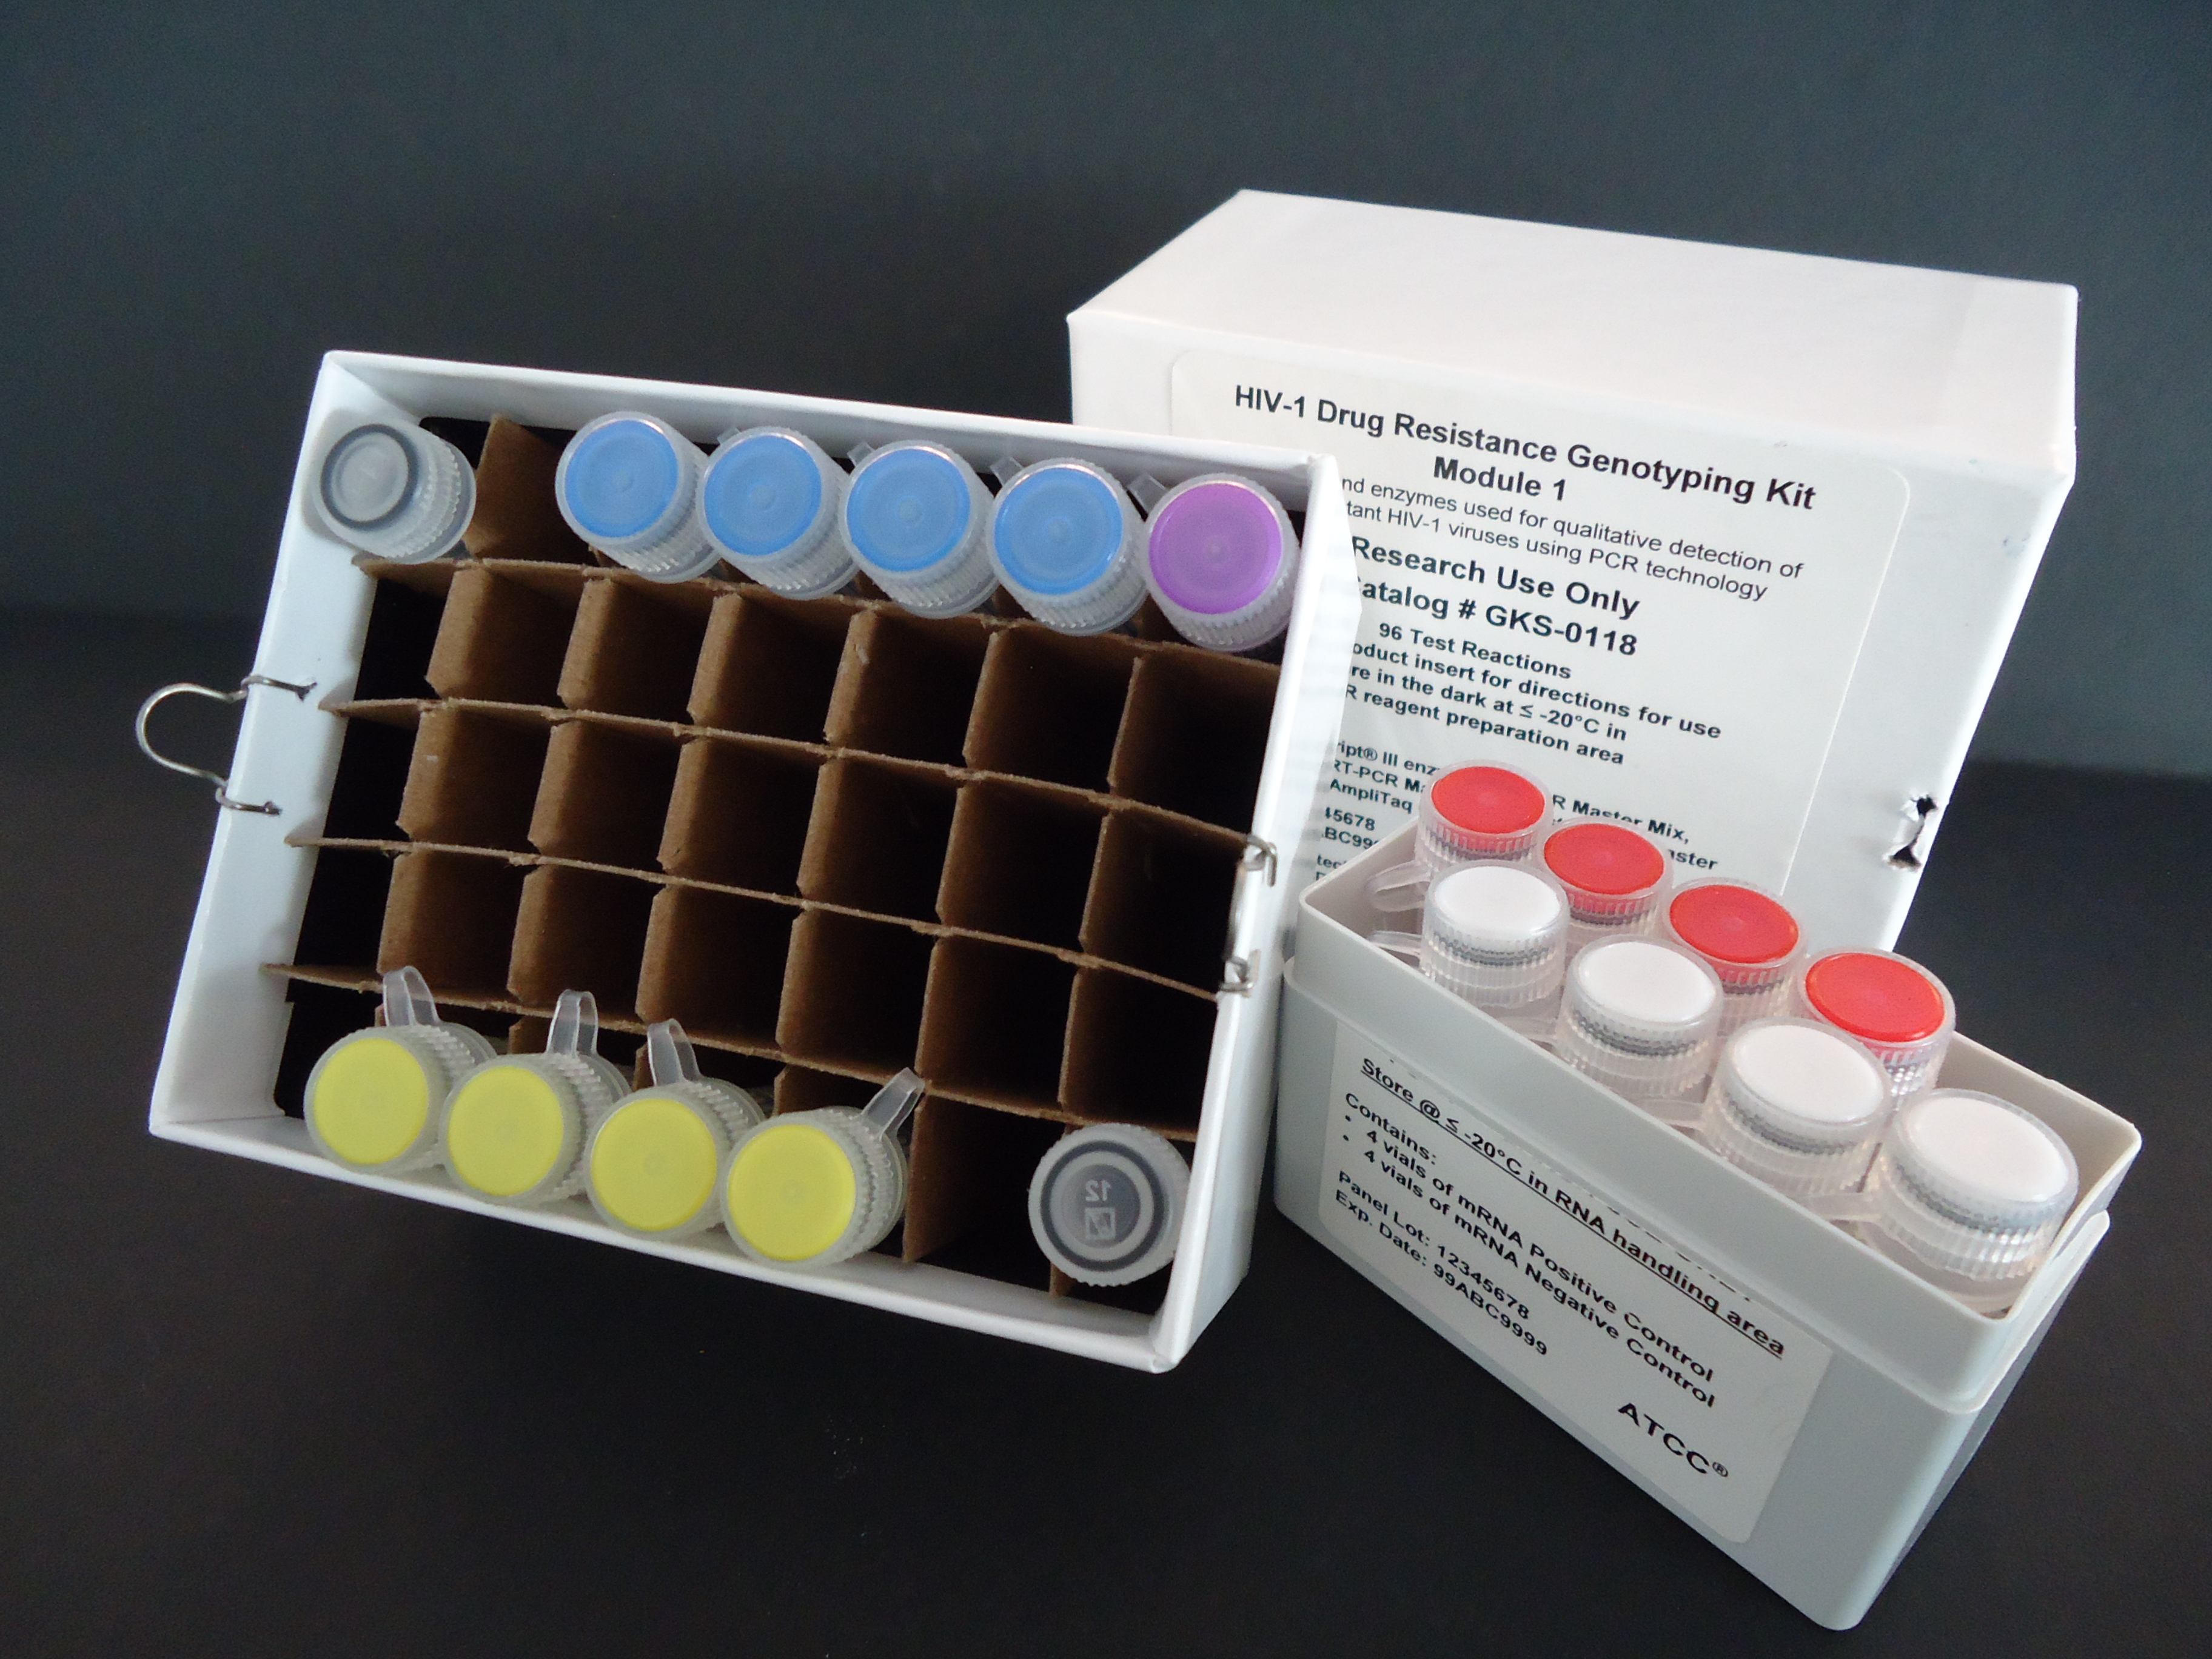 HIV-1 Drug Resistance Genotyping Kit Module 1, by ATCC